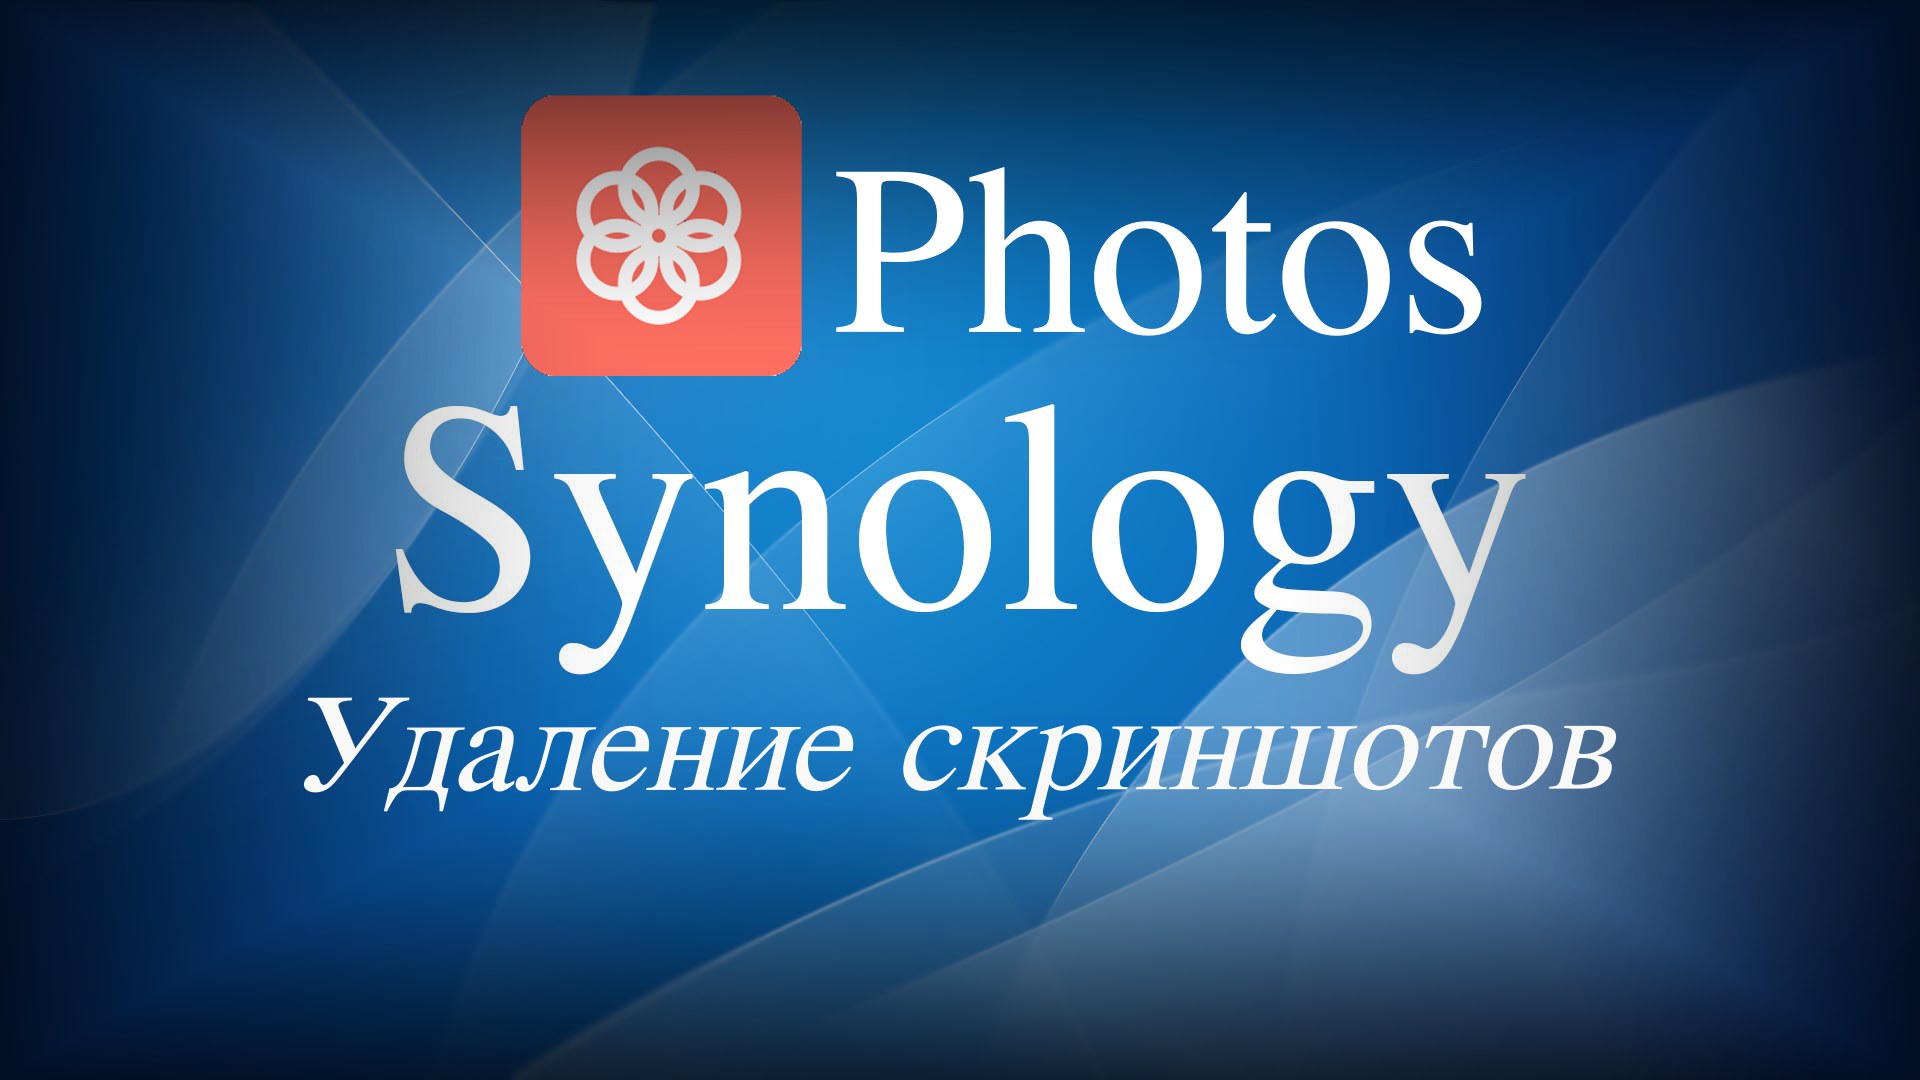 Read more about the article Synology Photos автоматическое удаление скриншотов